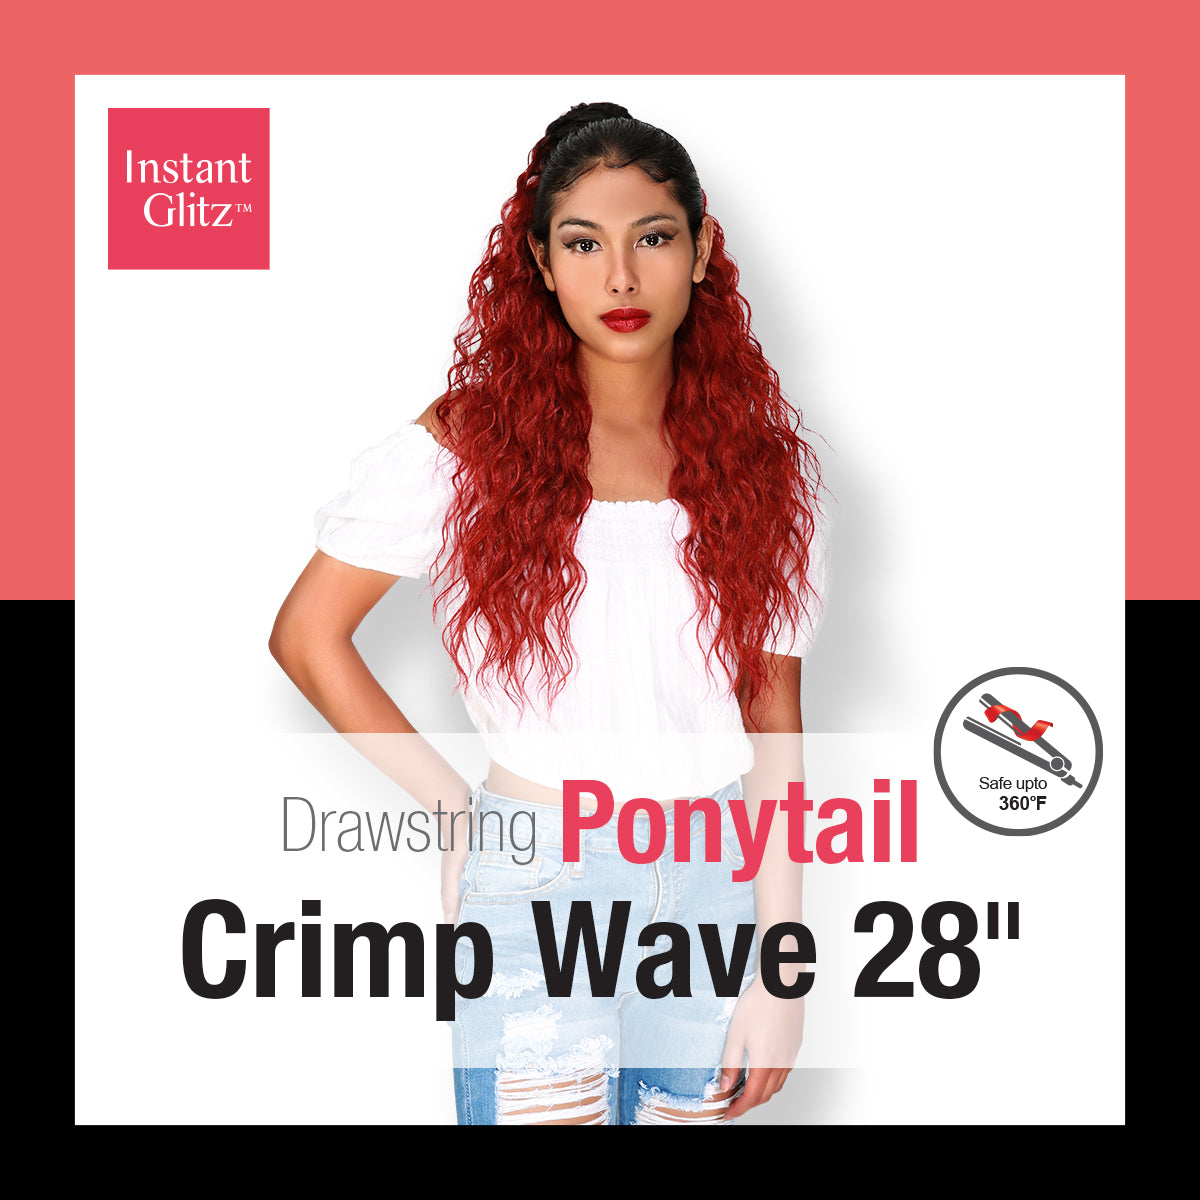 Instant Glitz Synthetic Drawstring Ponytail Crimp Wave 28"